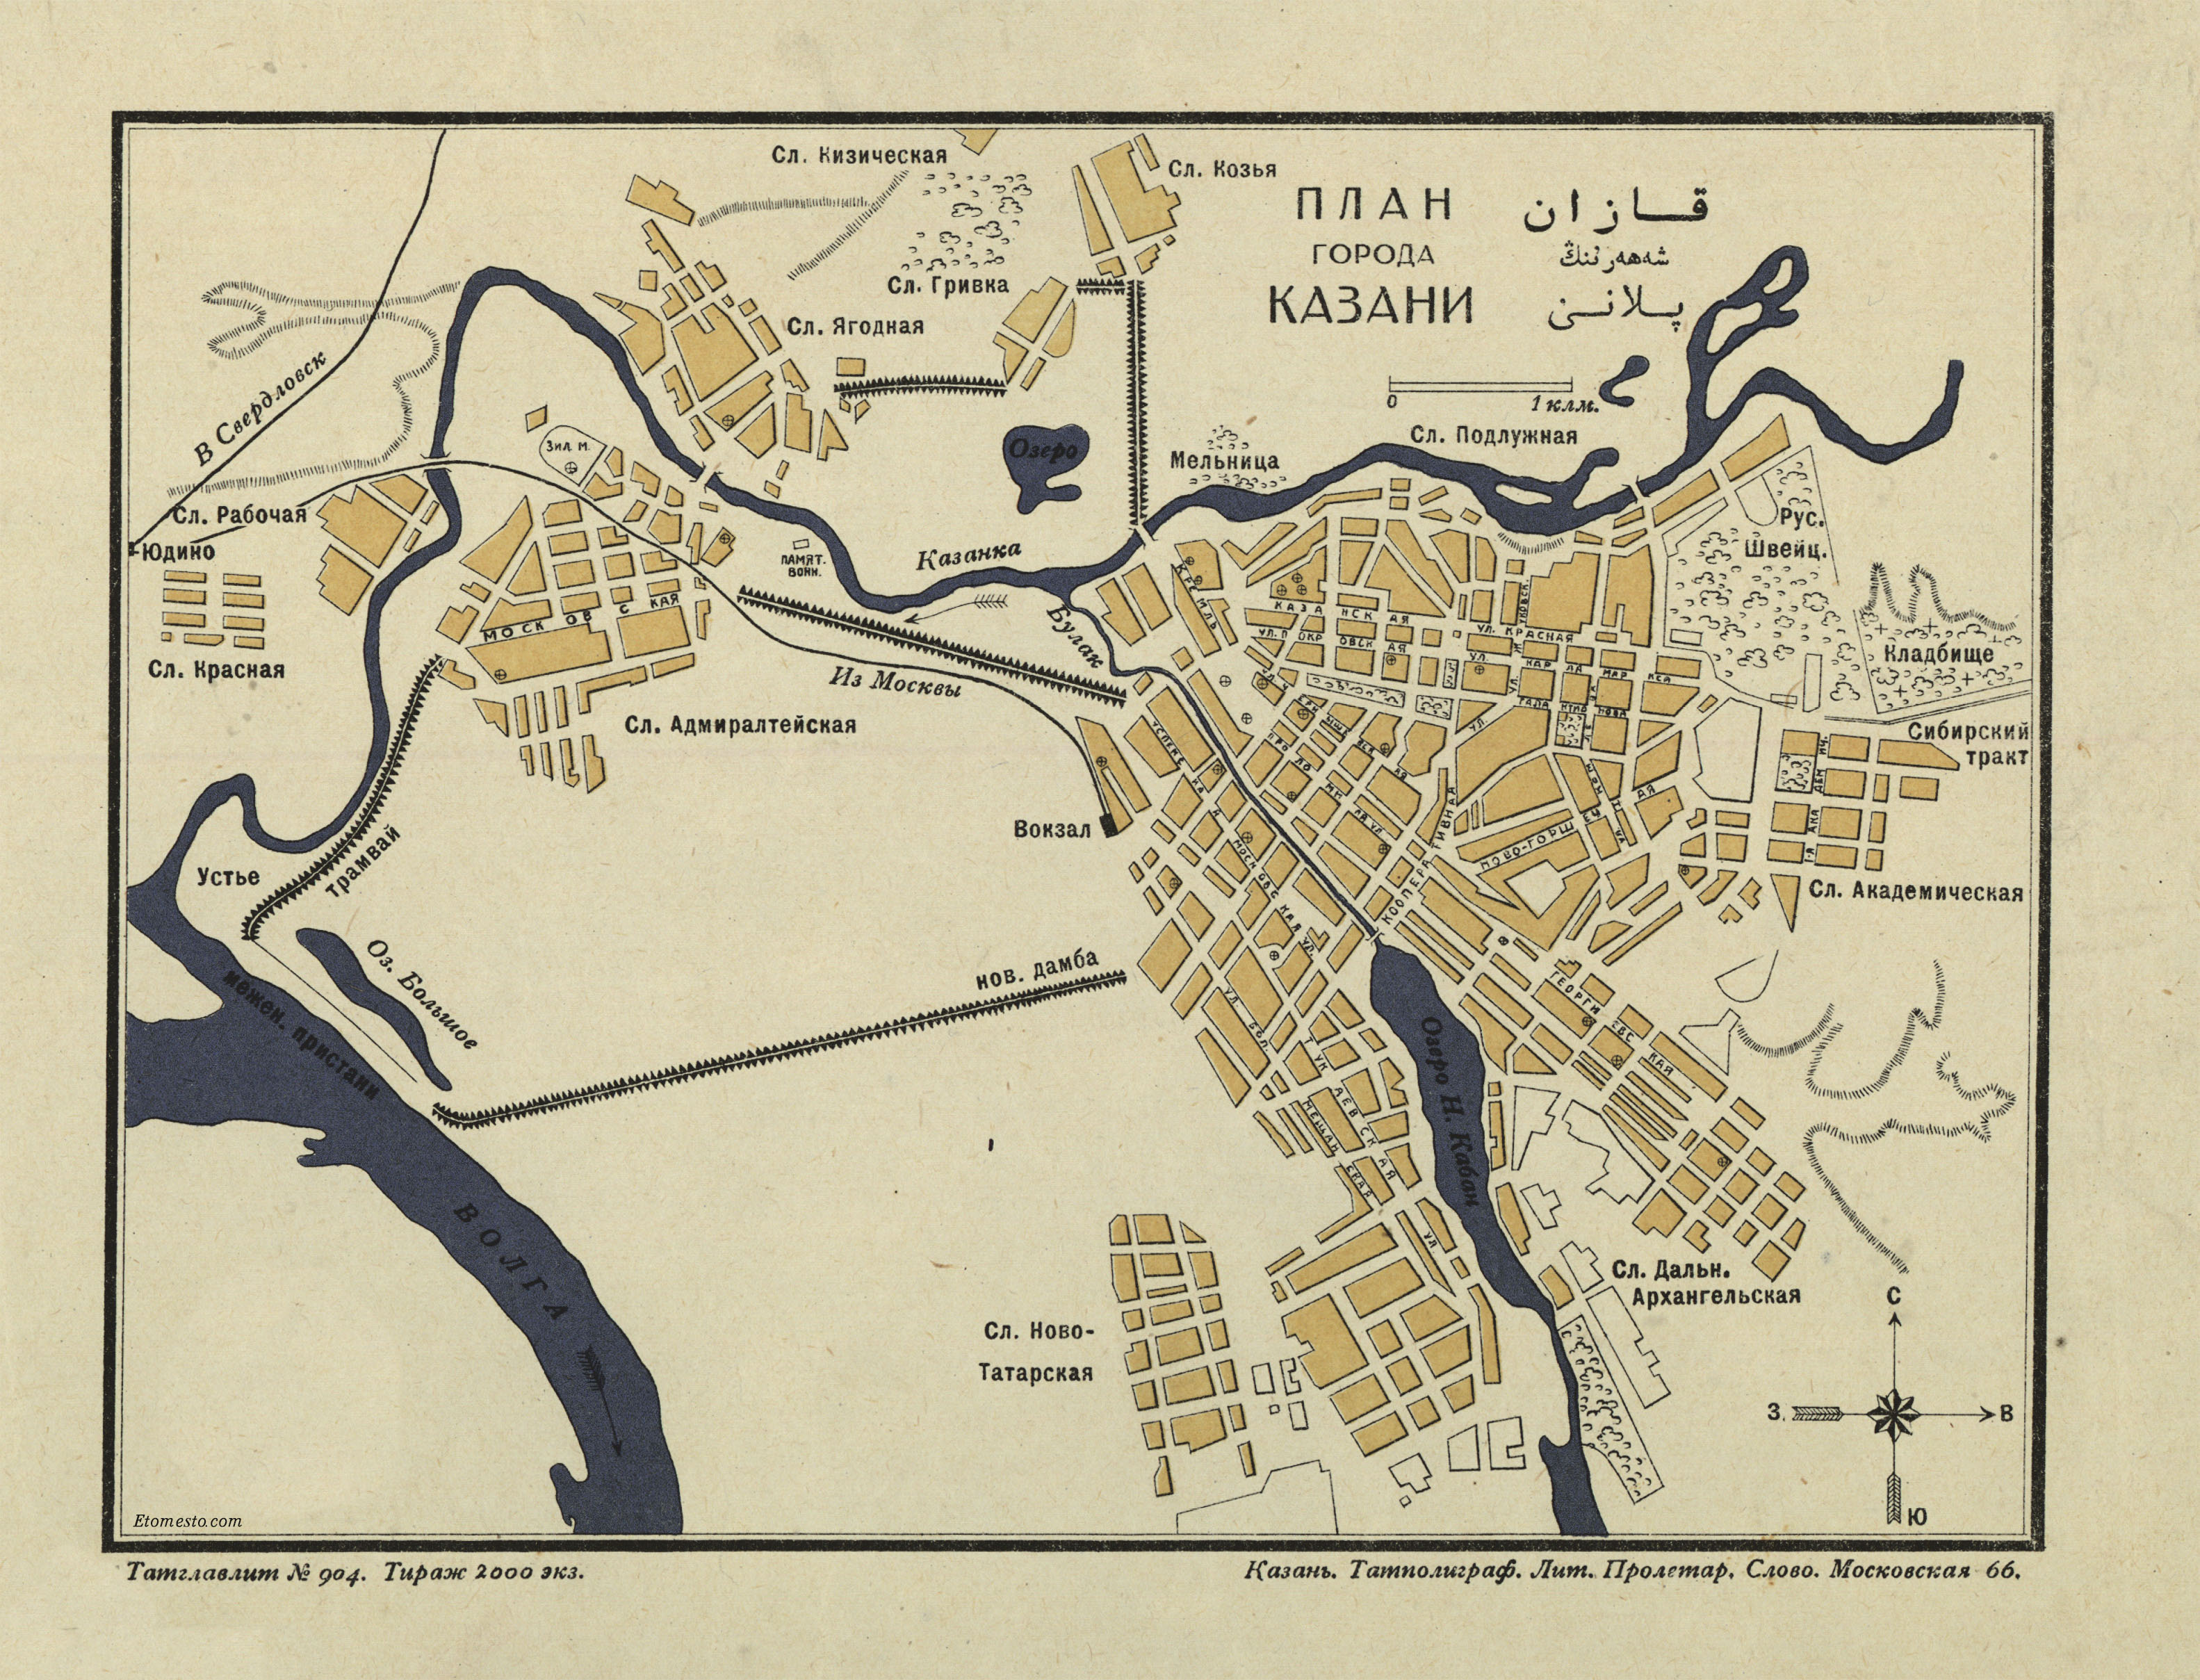 Plan of the city of Kazan, 1928